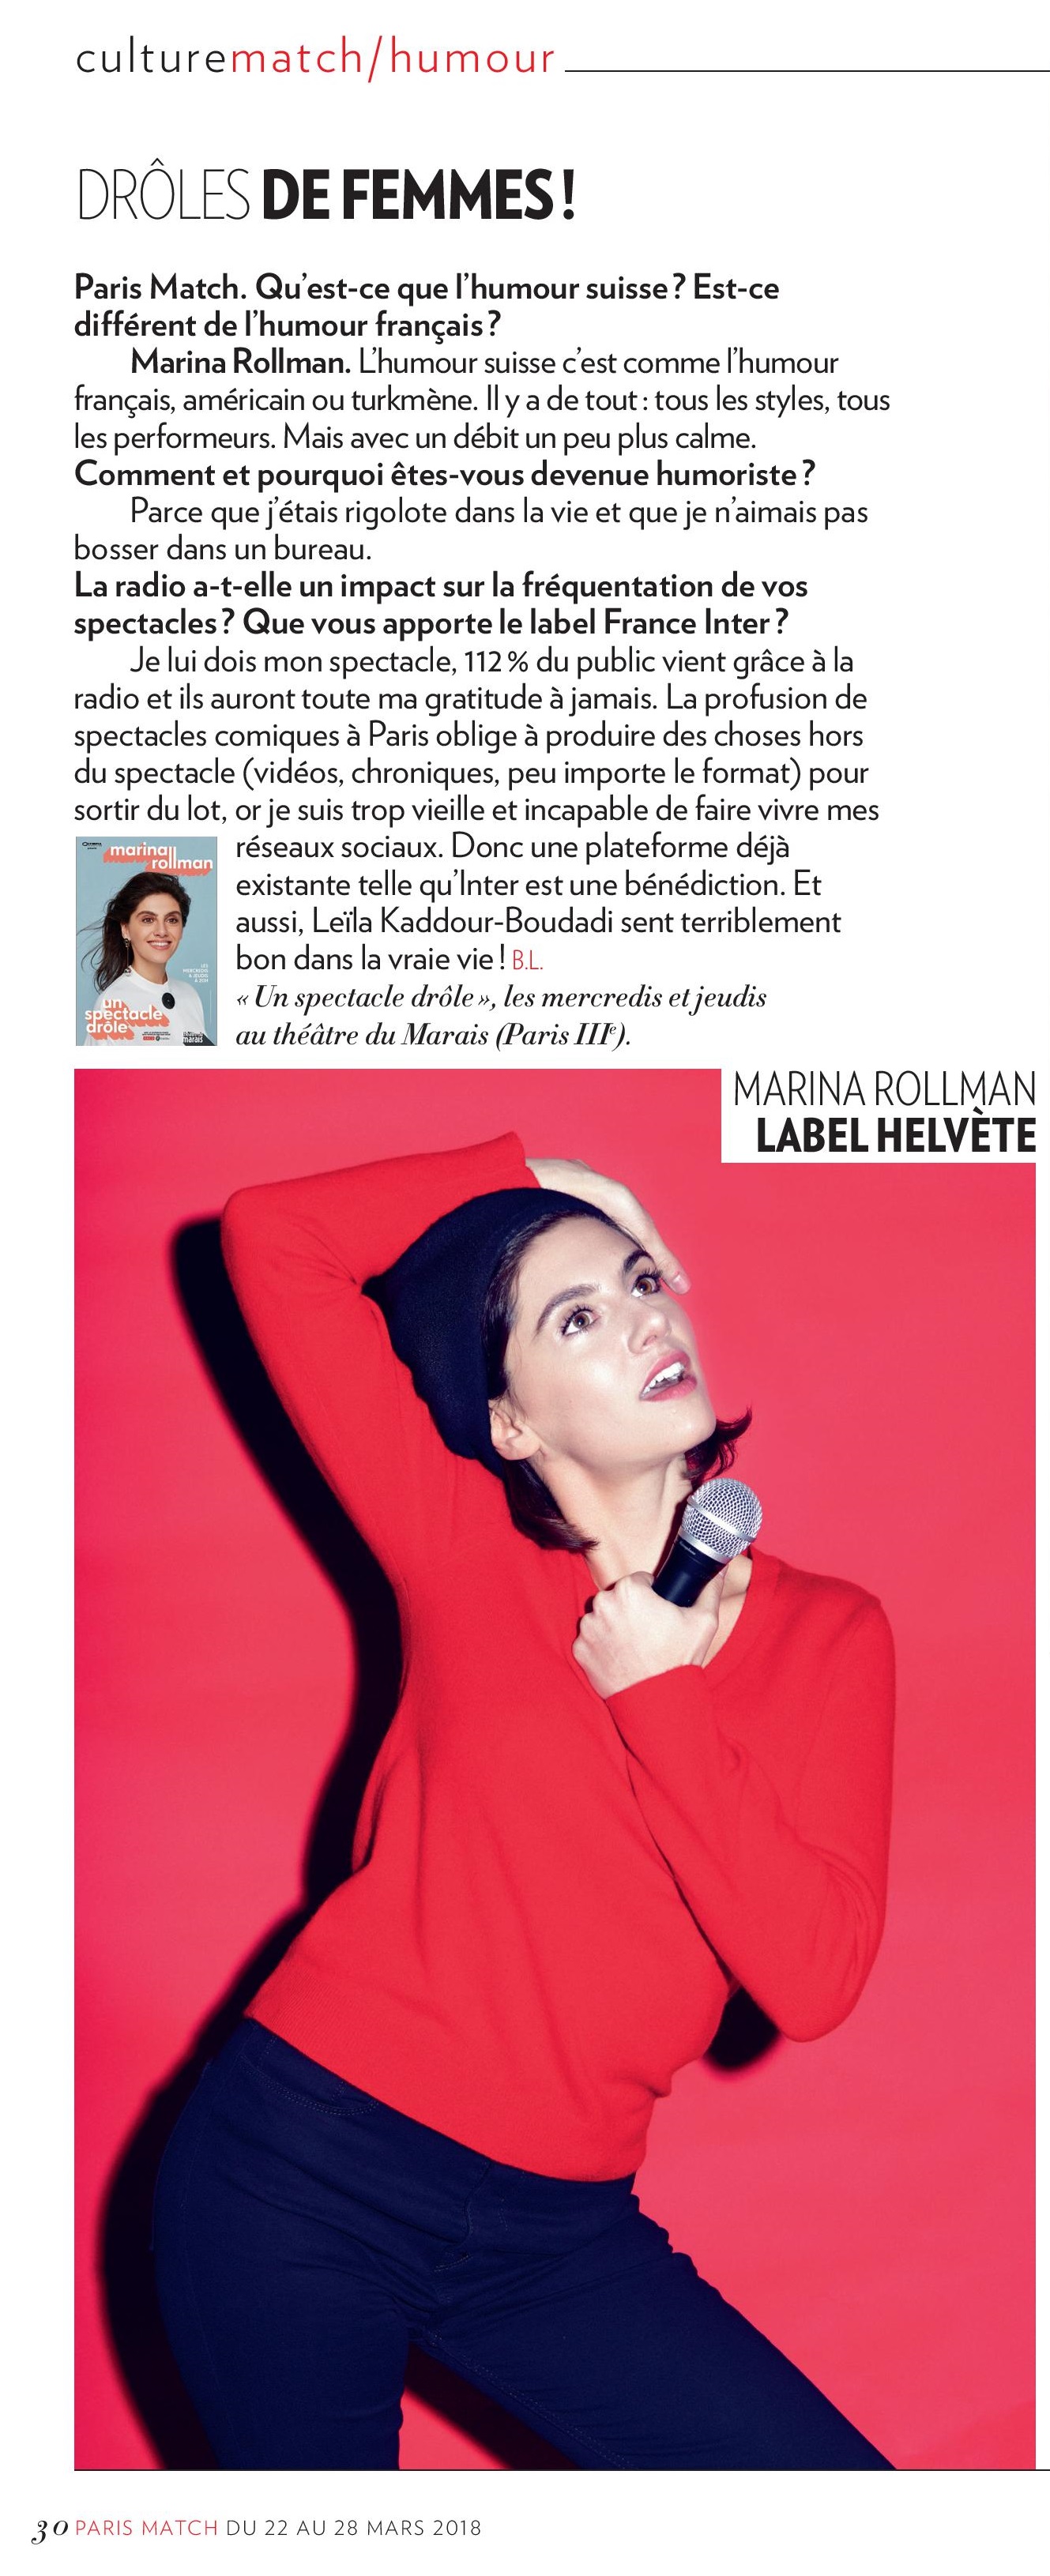 Paris Match : Marina Rollman, label helvète